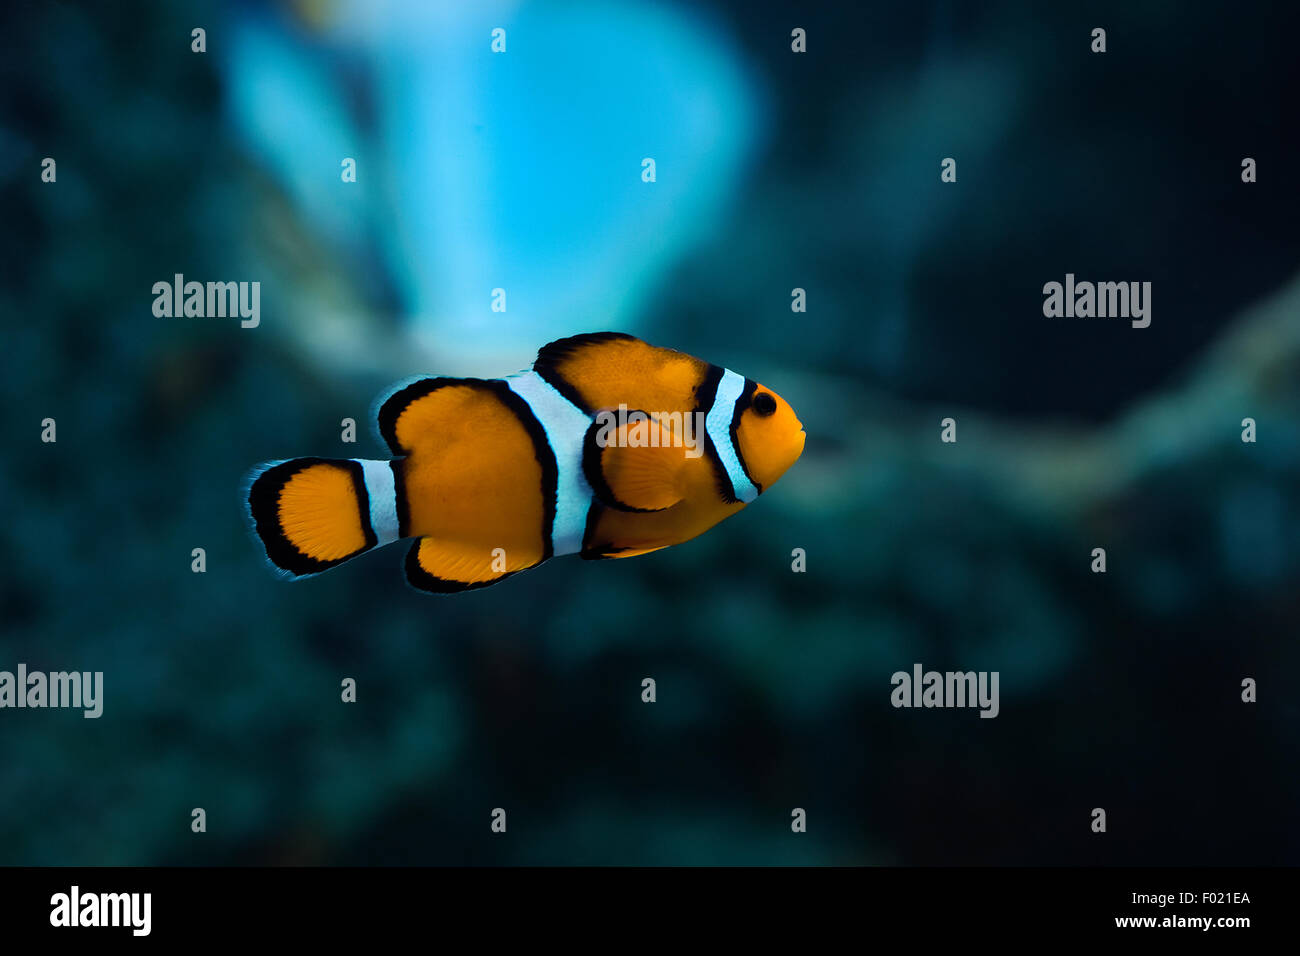 single clown fish in an aquarium Stock Photo